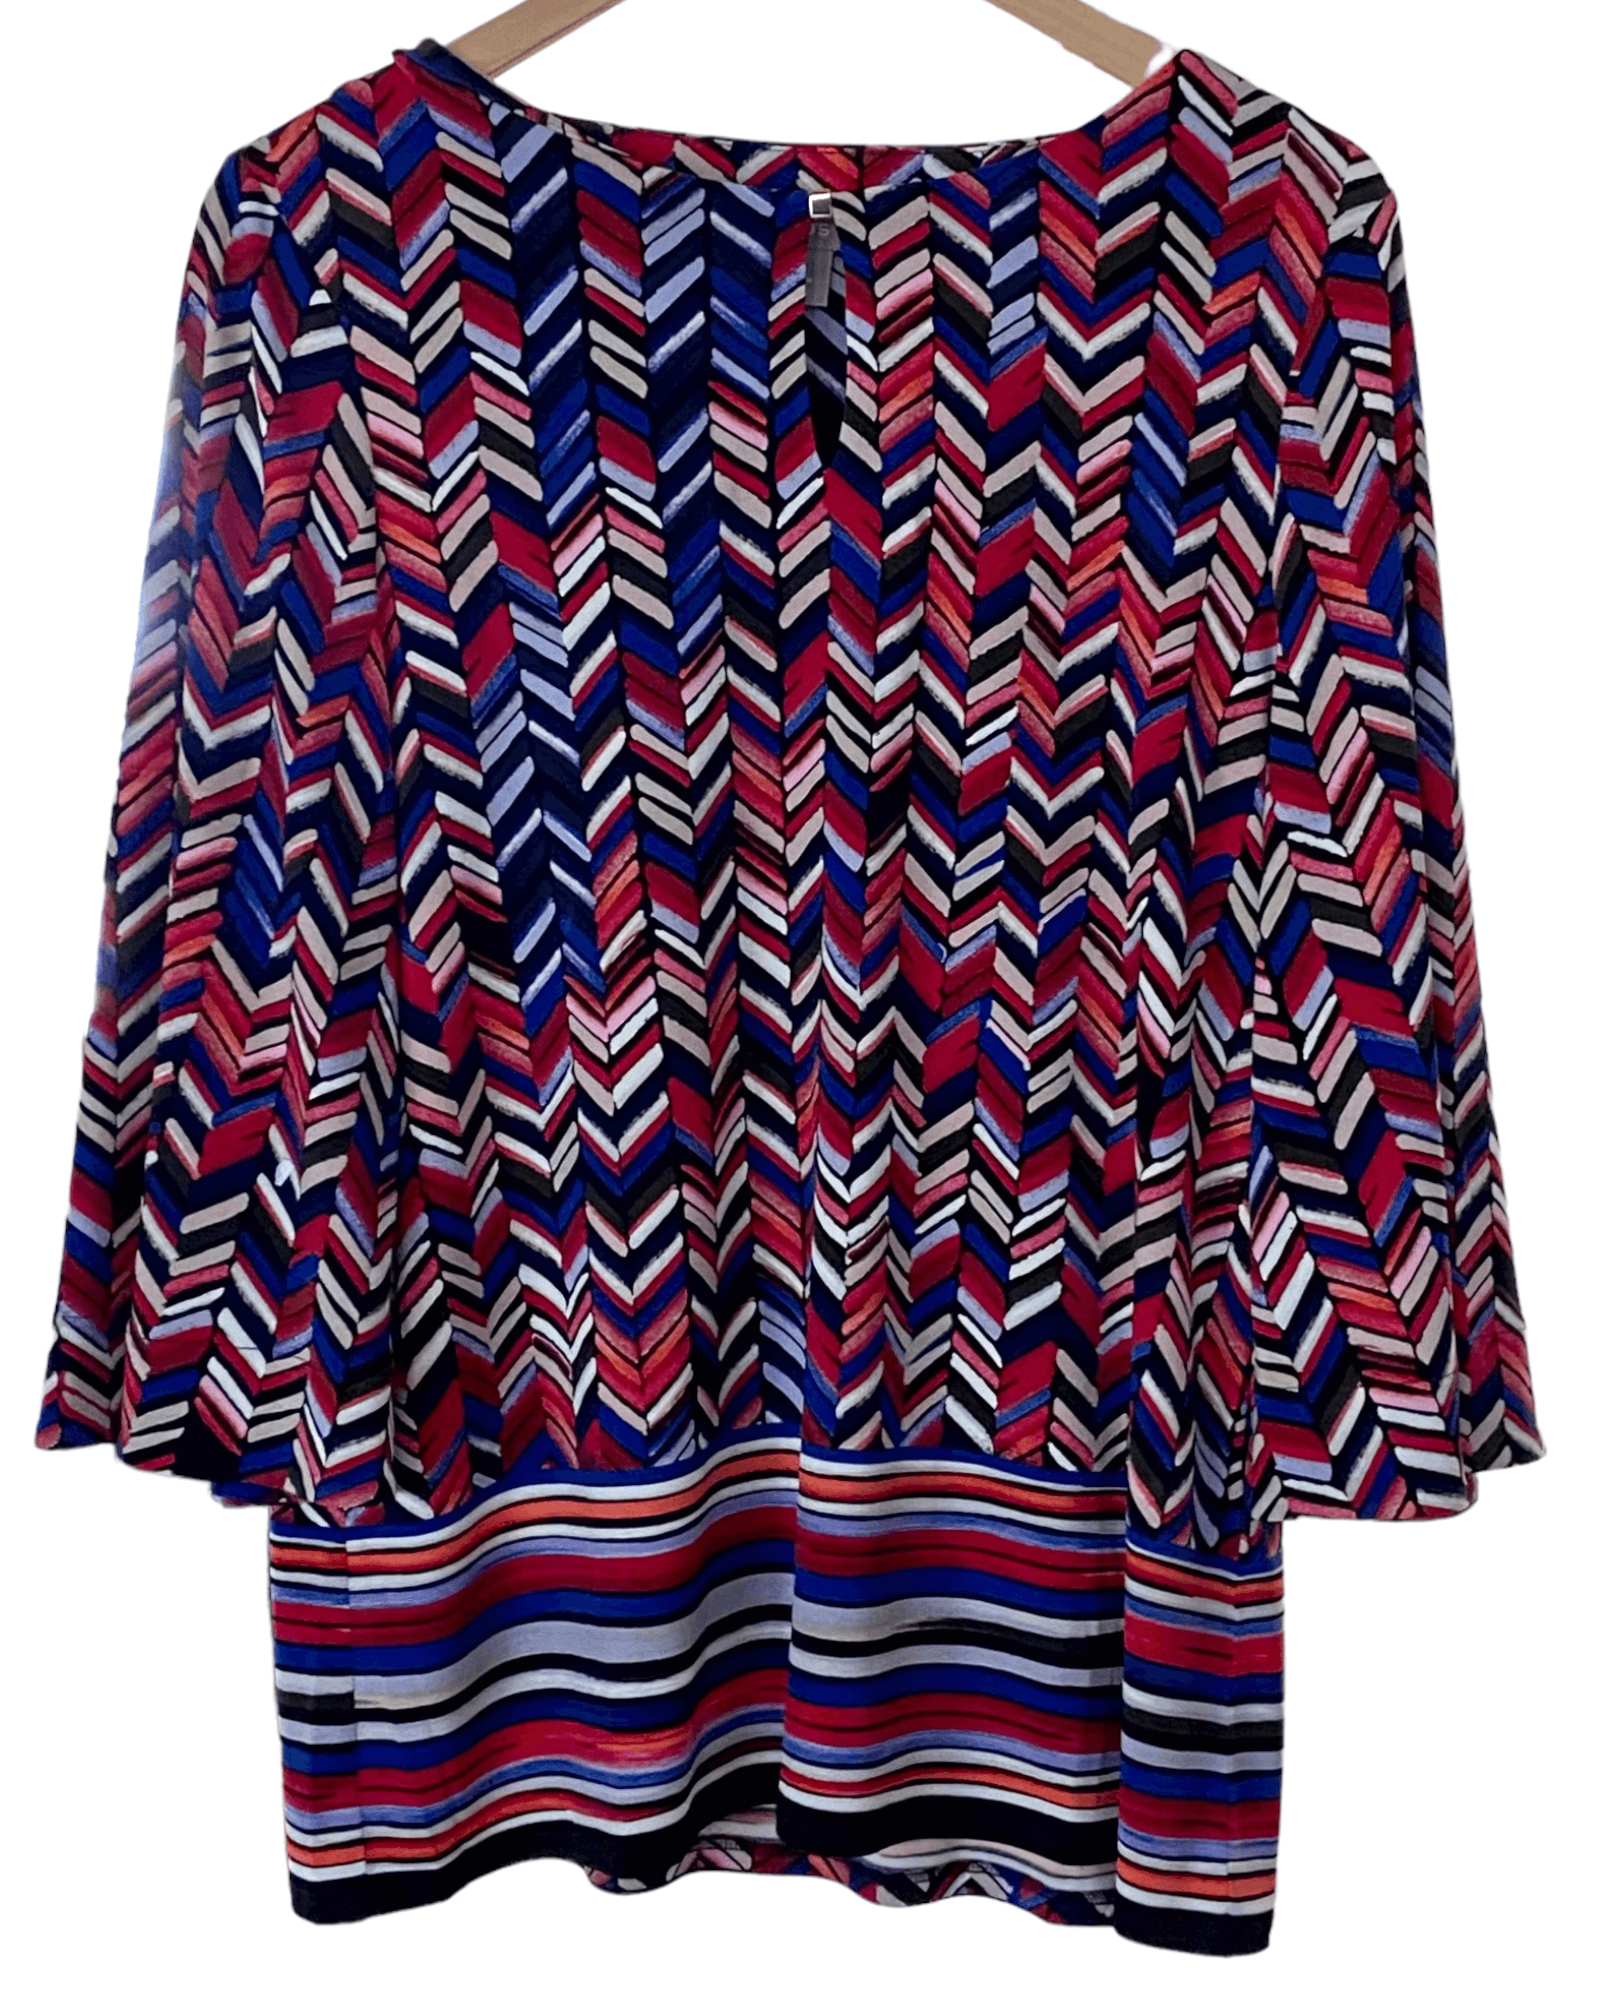 Dark Winter CHICO'S colorful zig-zag print blouse